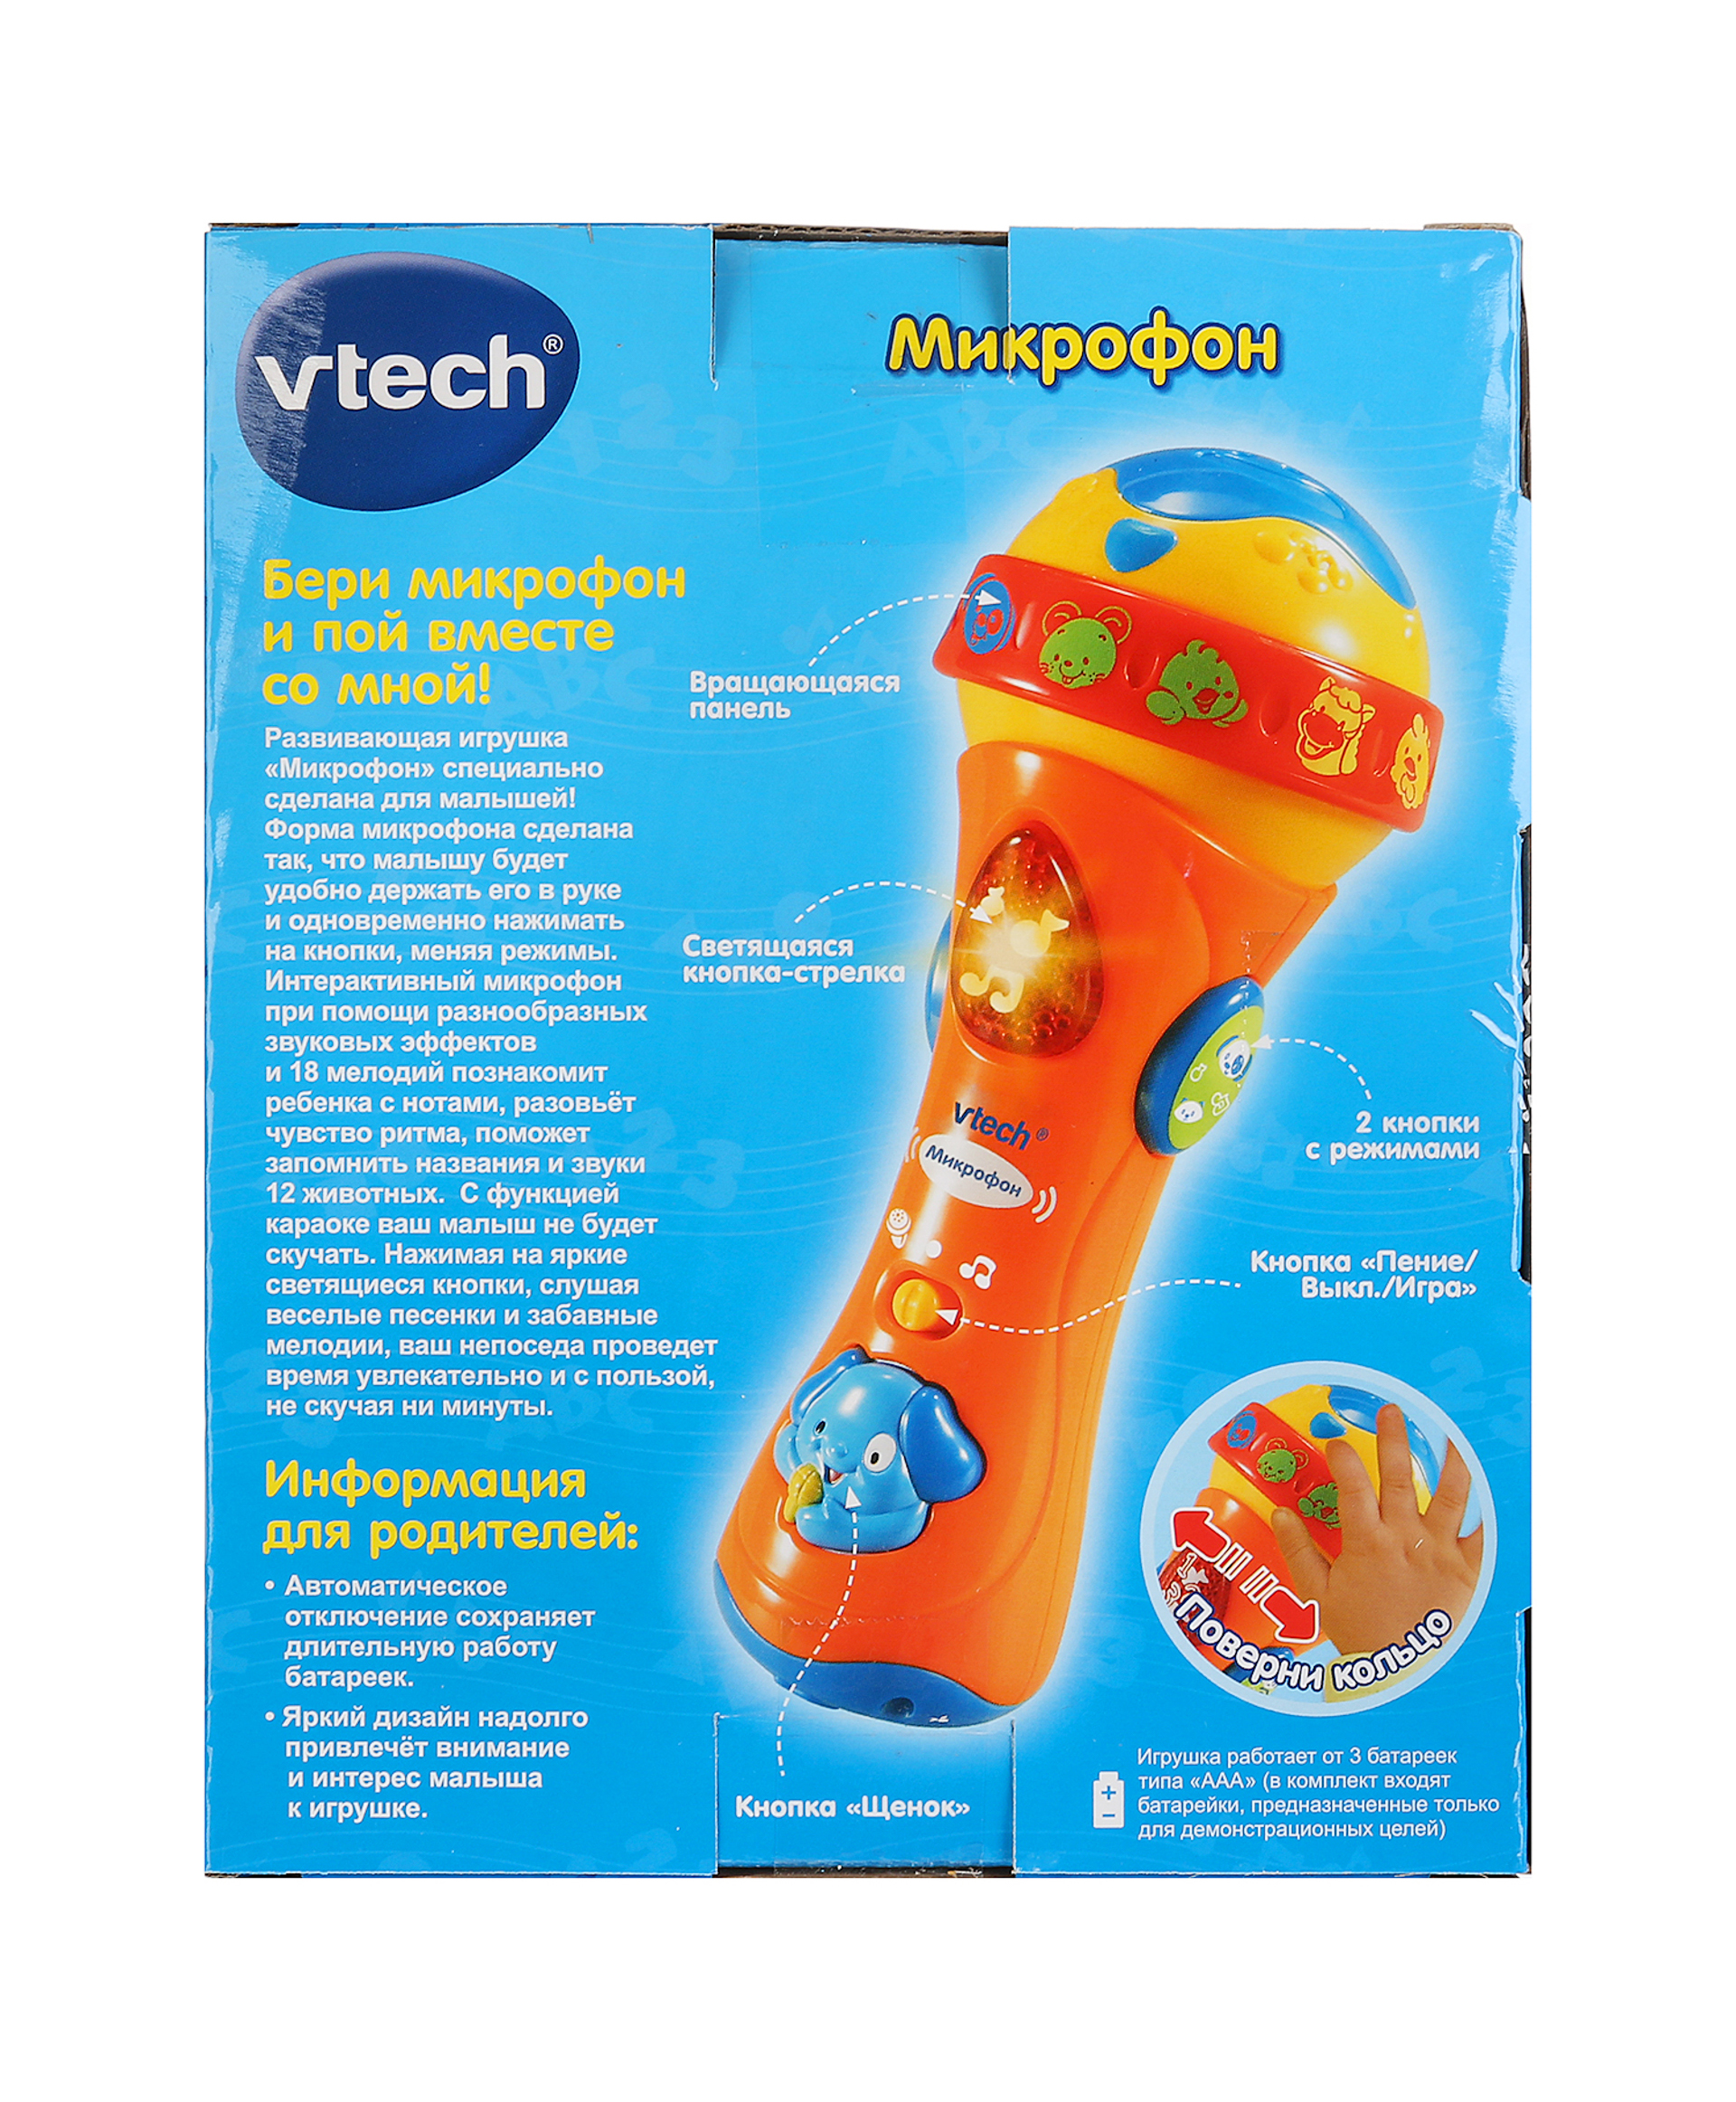 Vtech Развивающая игрушка "Микрофон" со светом 145446 - фото 4